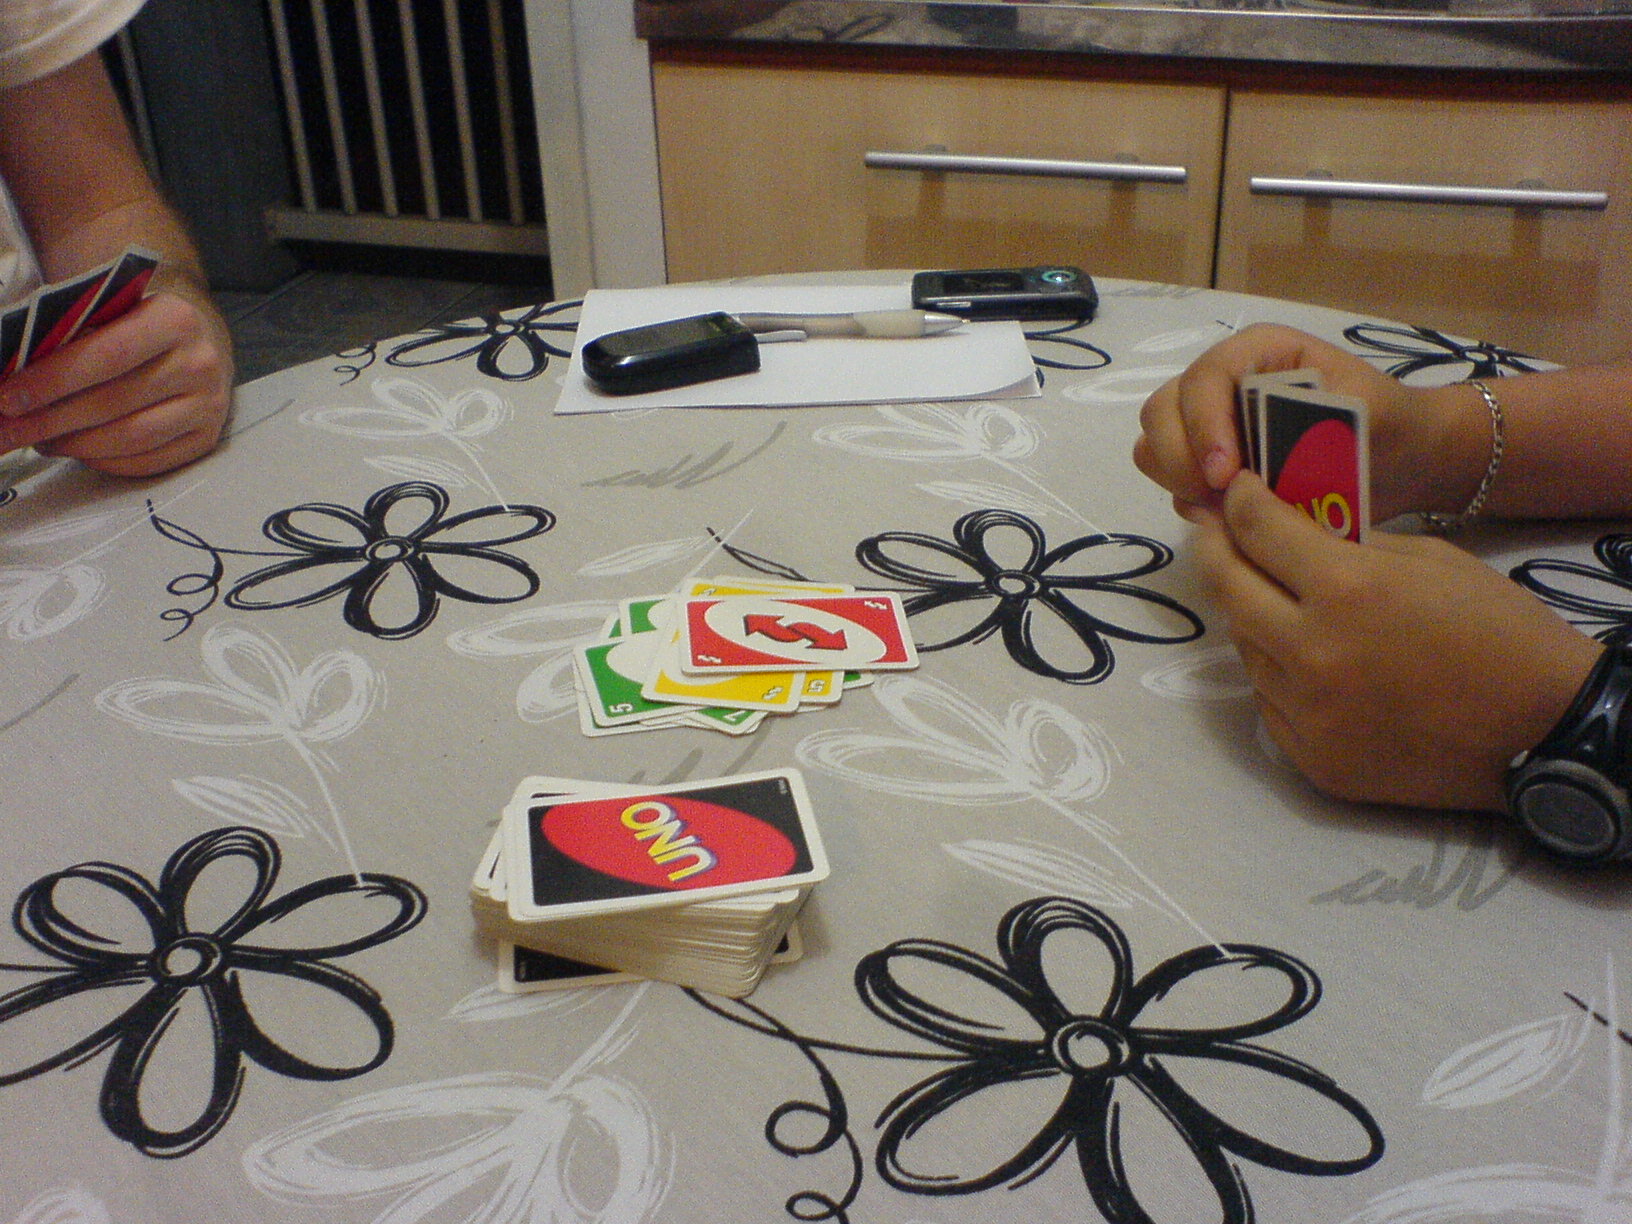 Vamos jogar Uno?